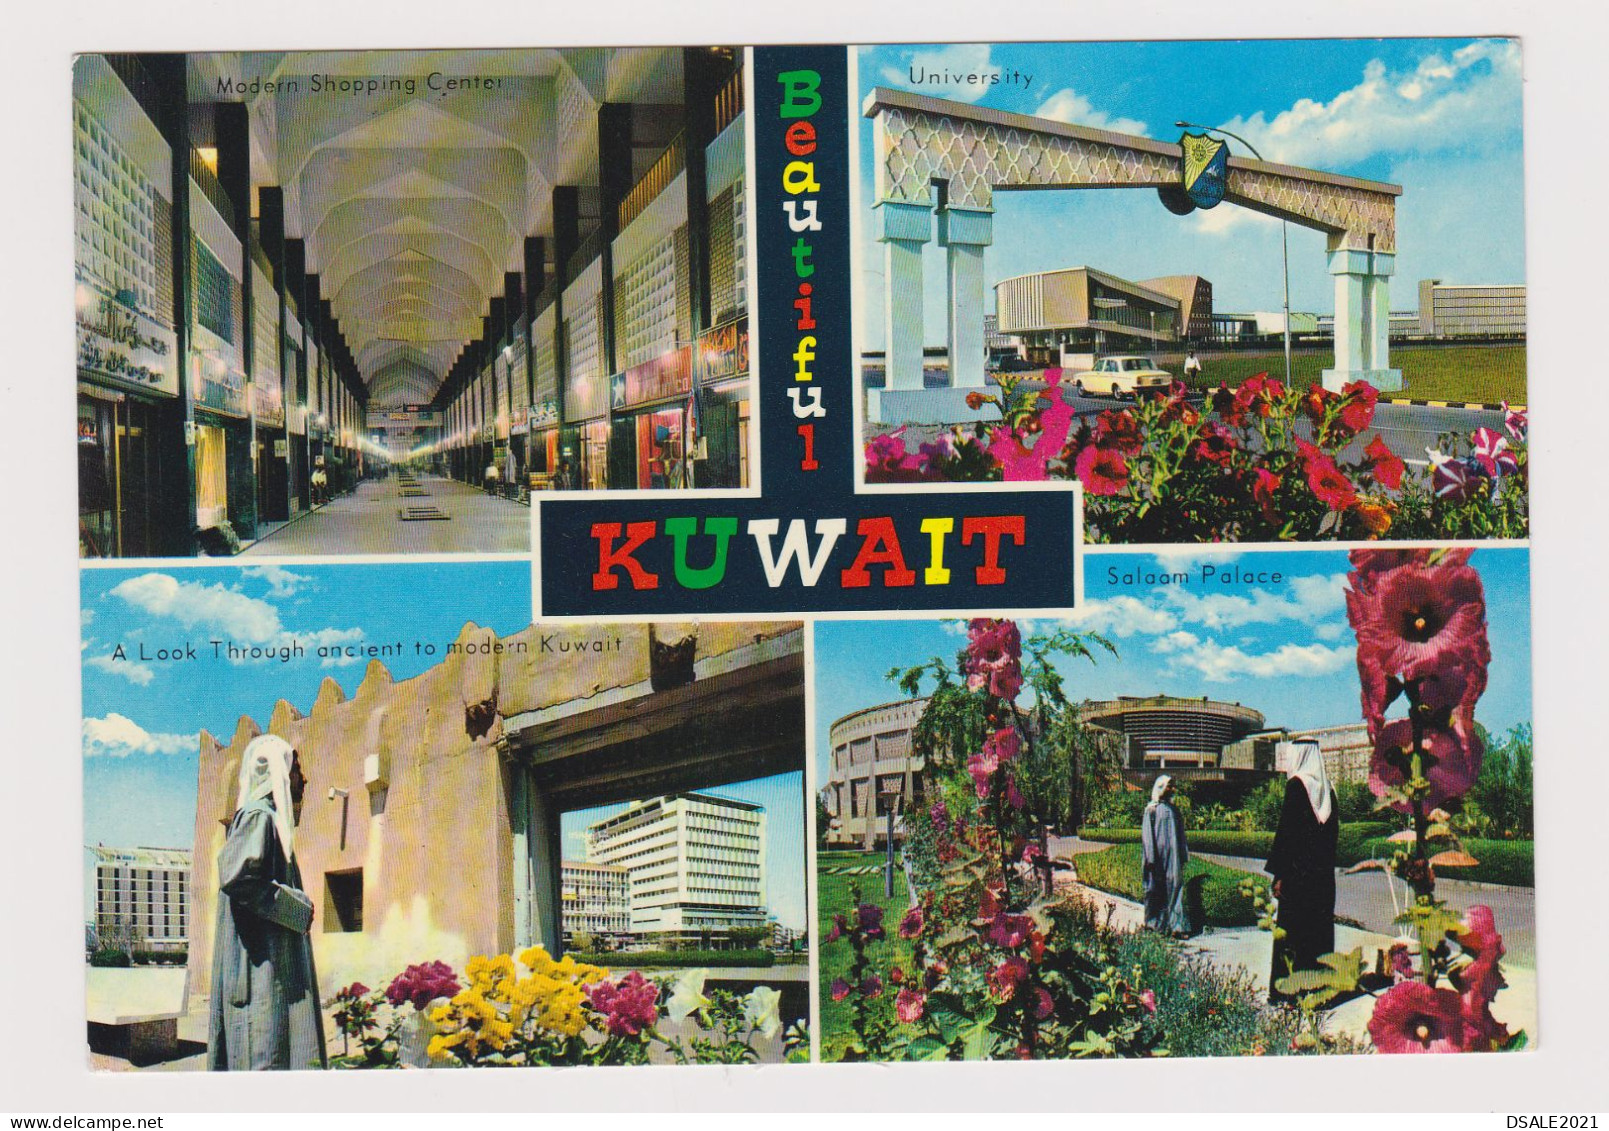 KUWAIT University, Shopping Center, Salaam Palace, View Vintage Photo Postcard RPPc AK (1312) - Koweït